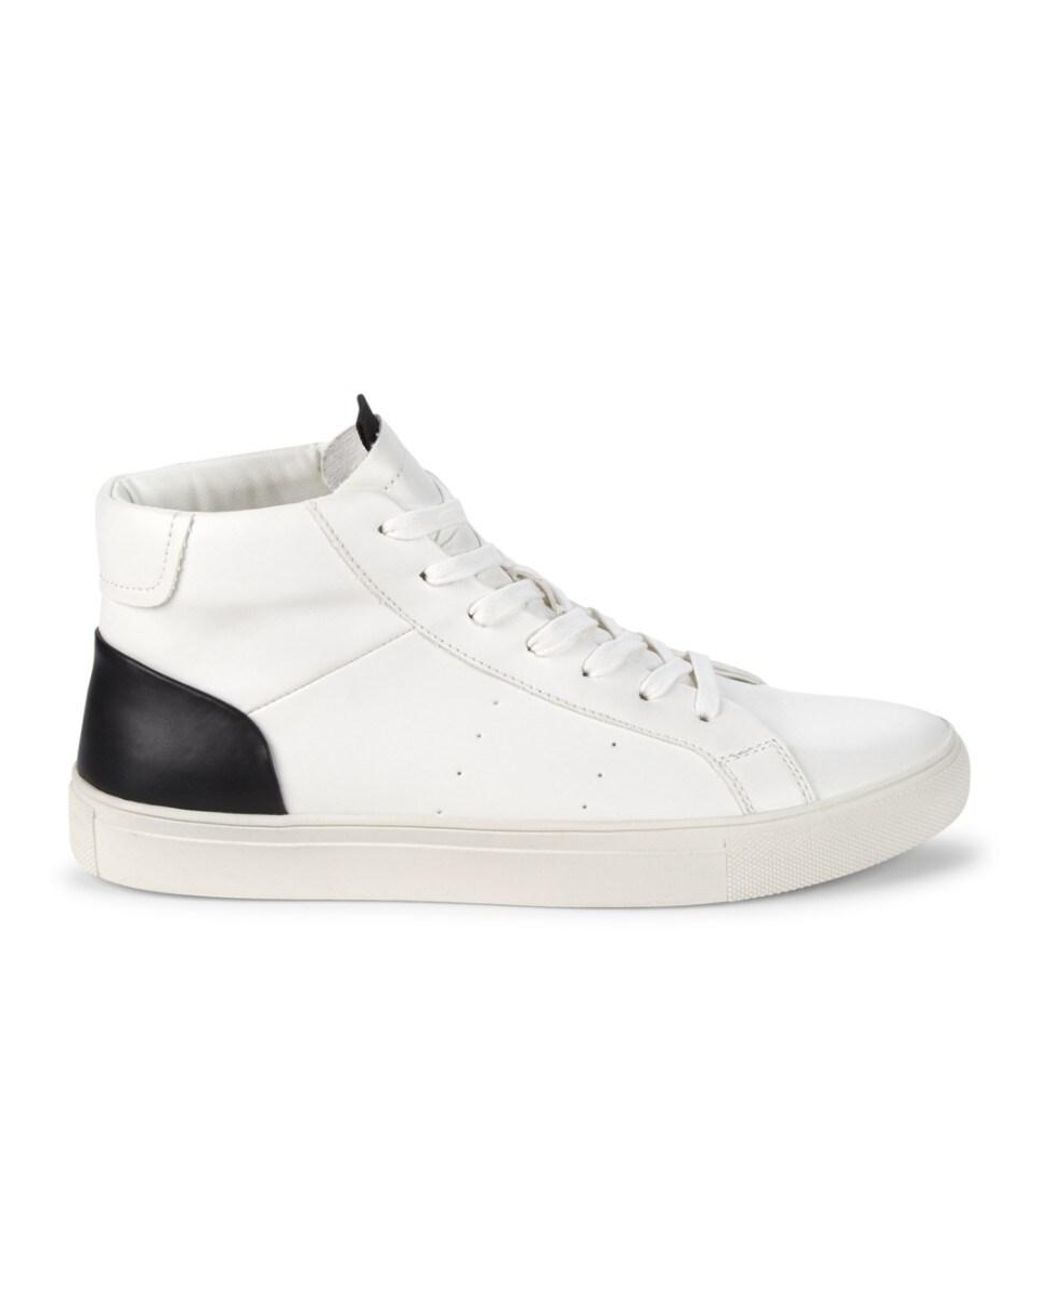 Steve Madden Men's Colorblock High-top Sneakers - White Black - Size 9 ...